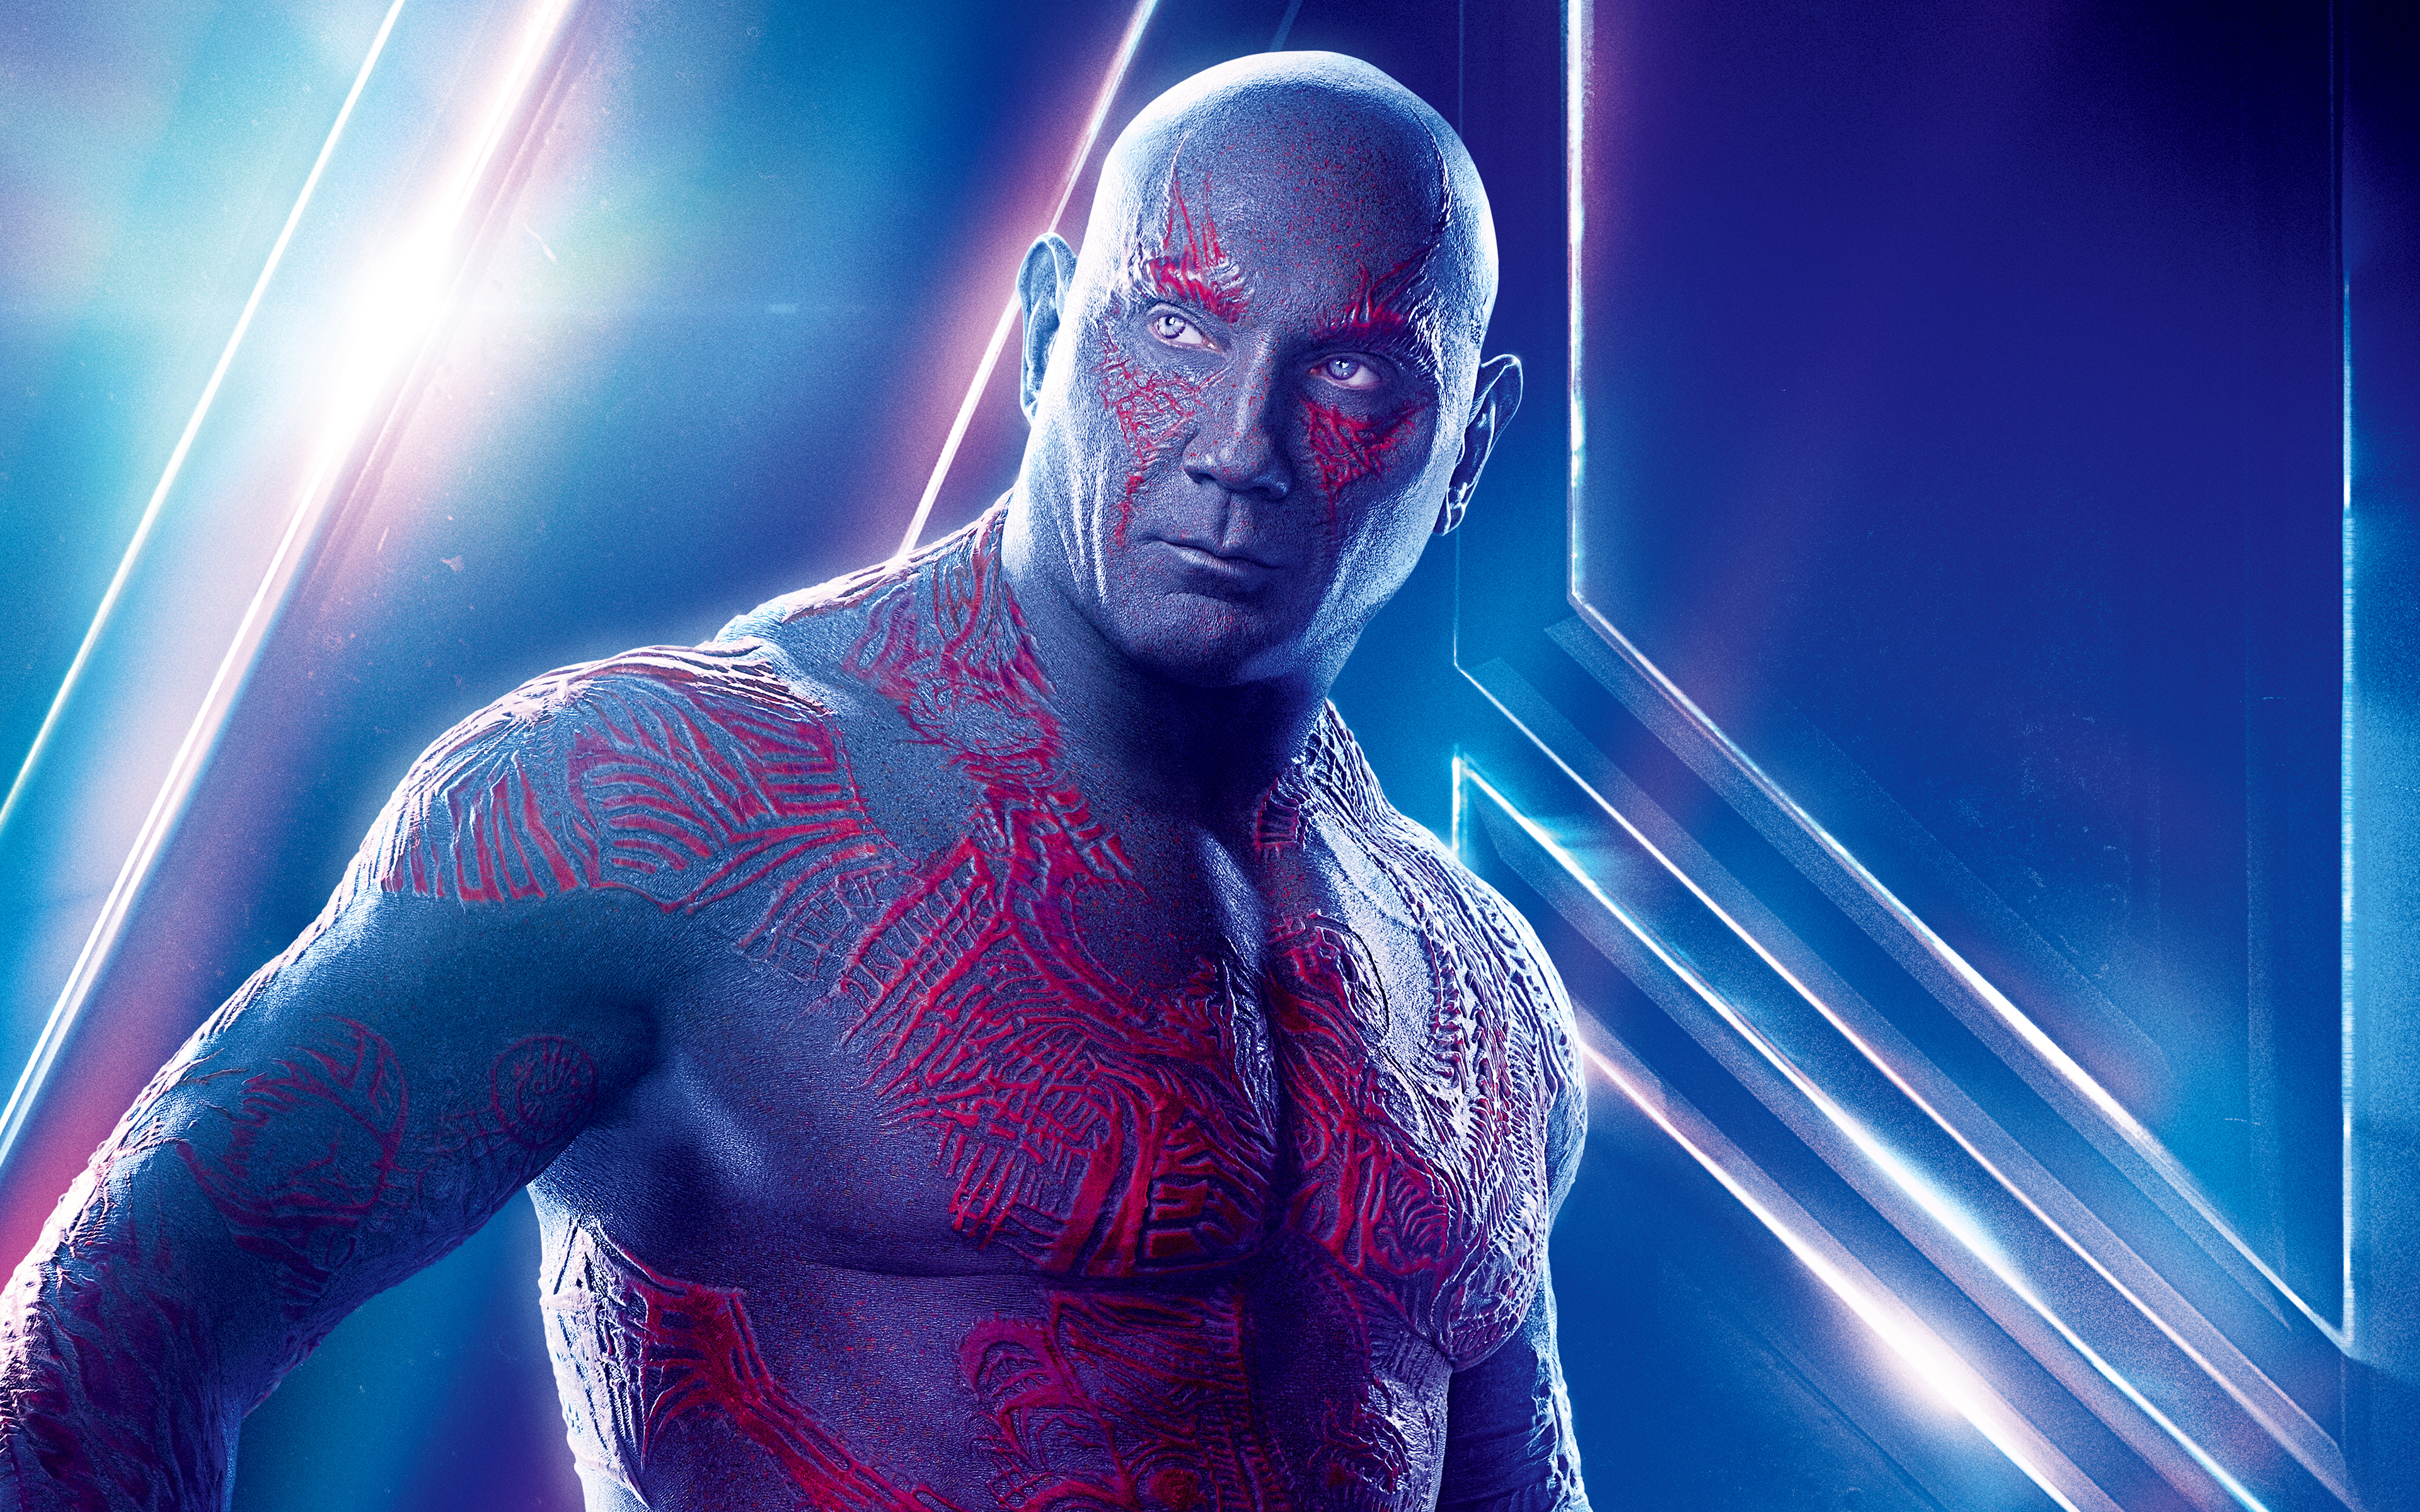 Drax in Avengers Infinity War Dave Bautista 4K 8K Wallpapers